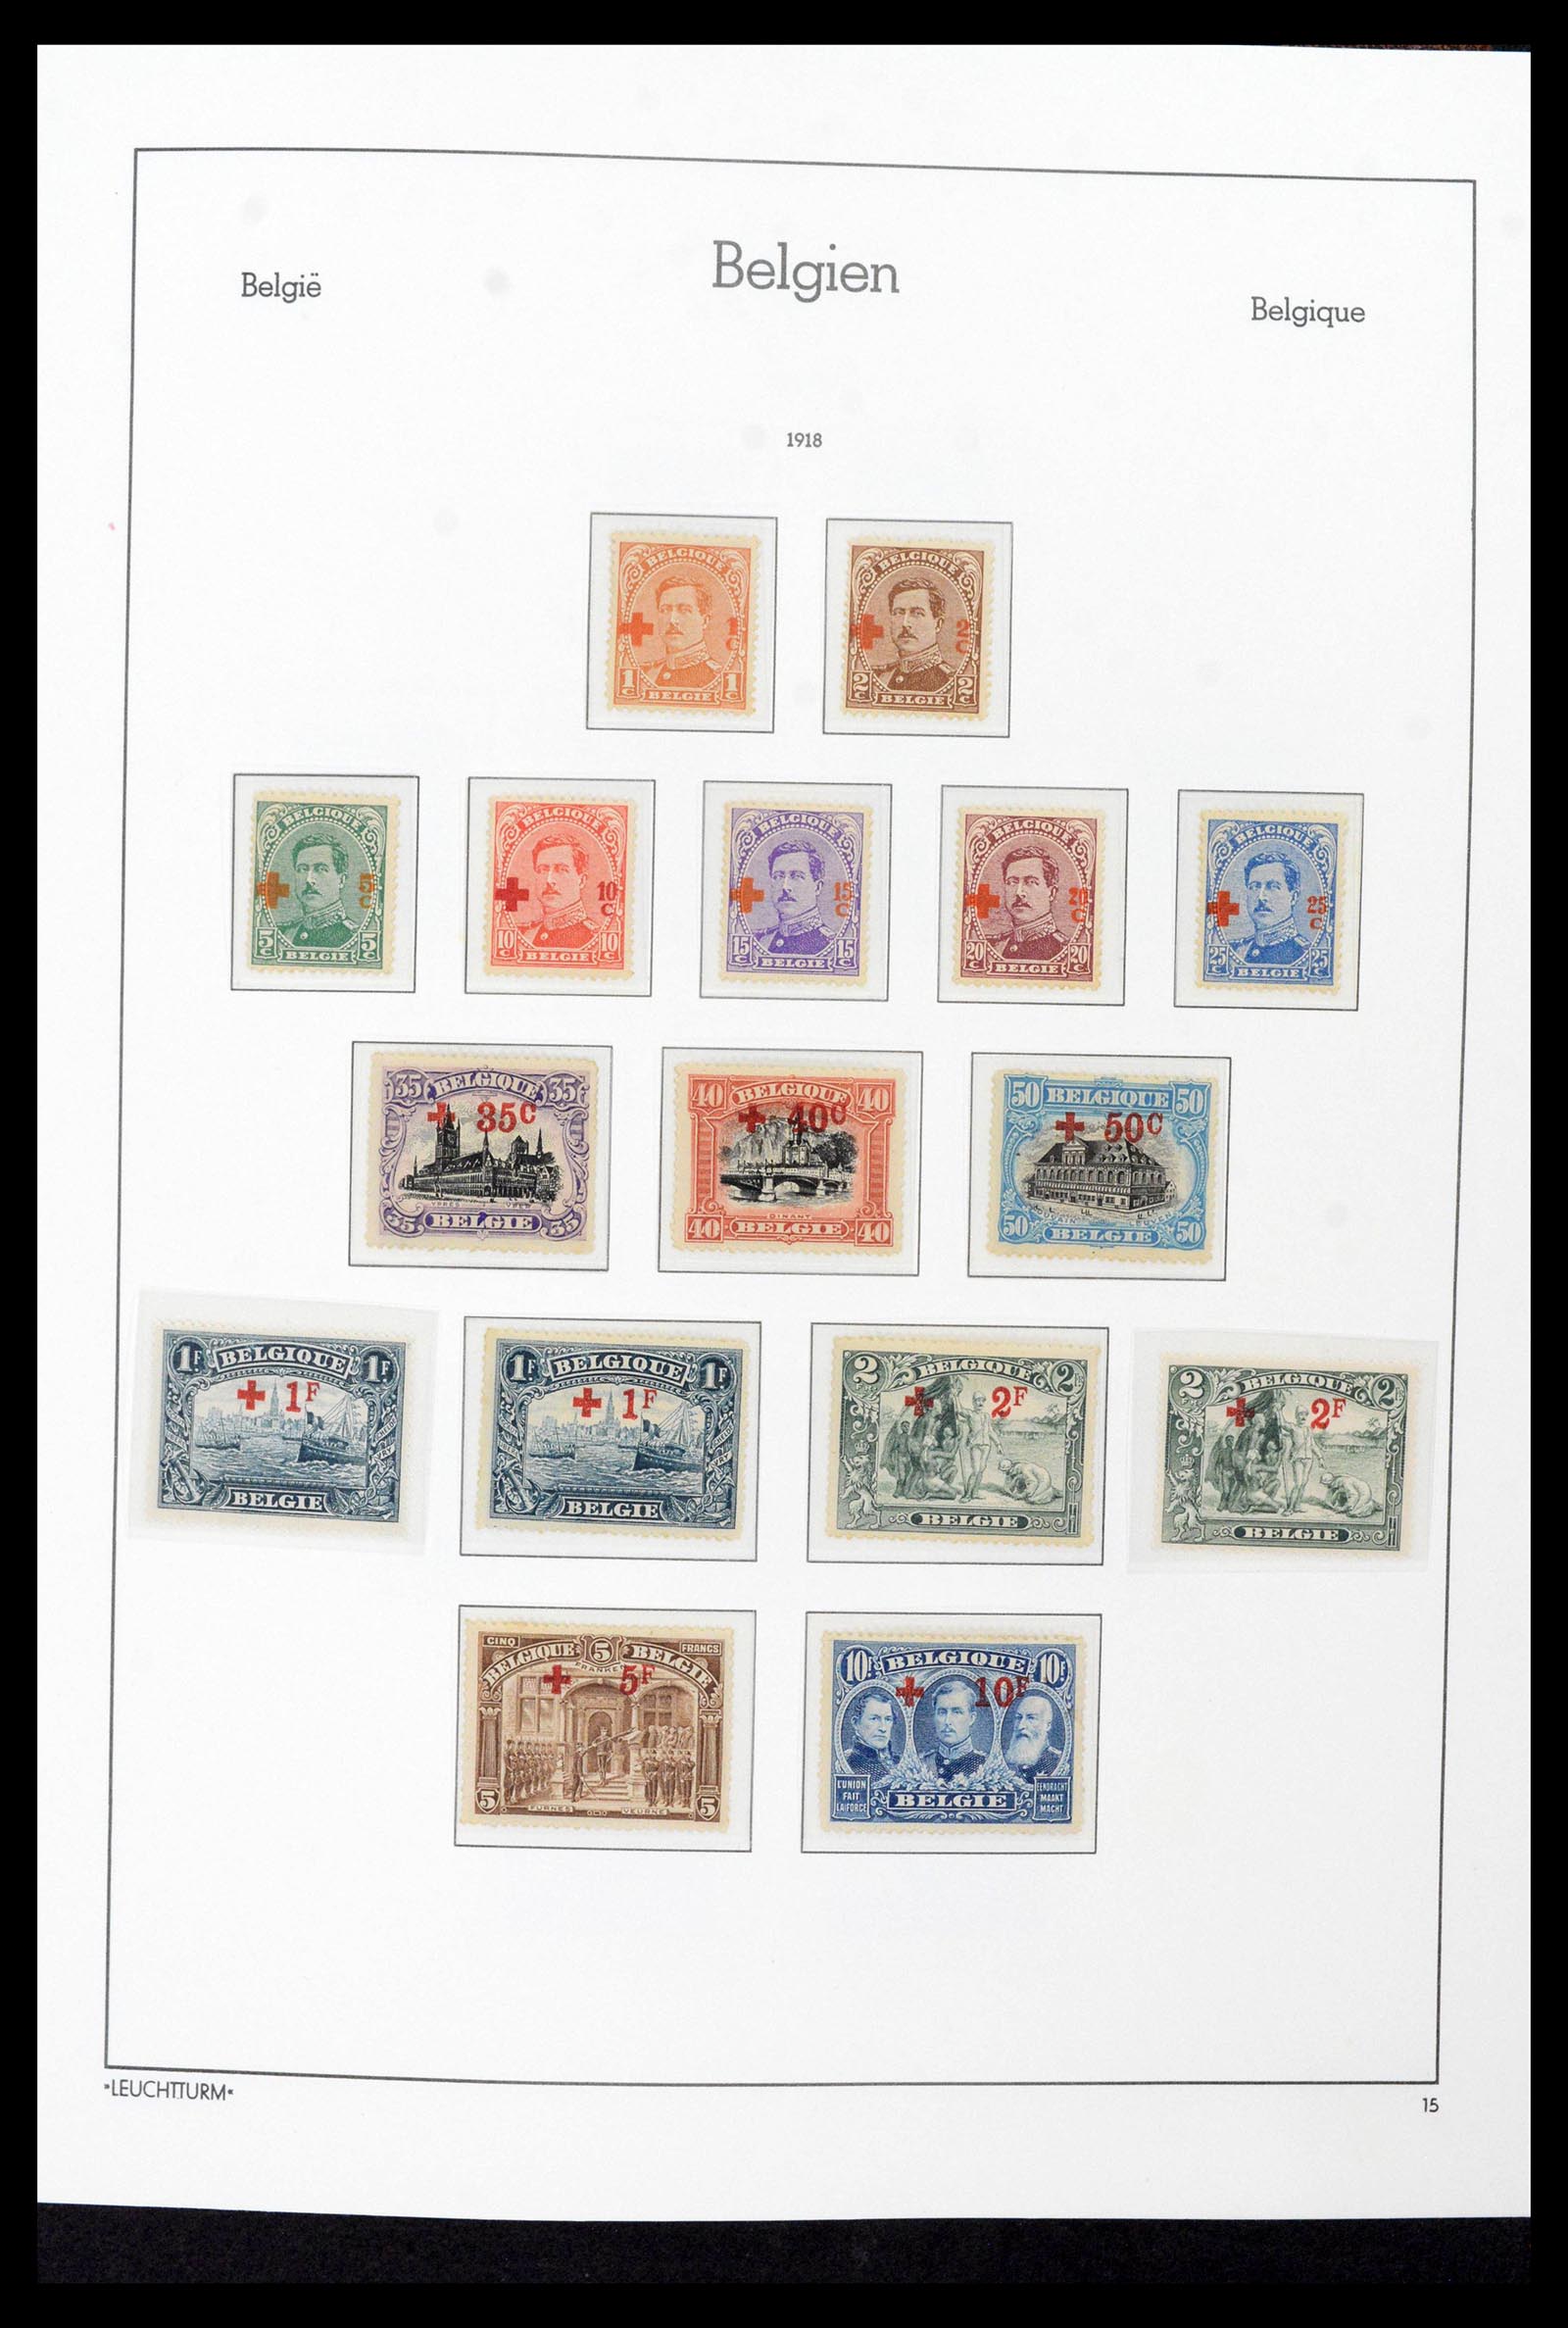 39137 0021 - Stamp collection 39137 Belgium 1849-2002.